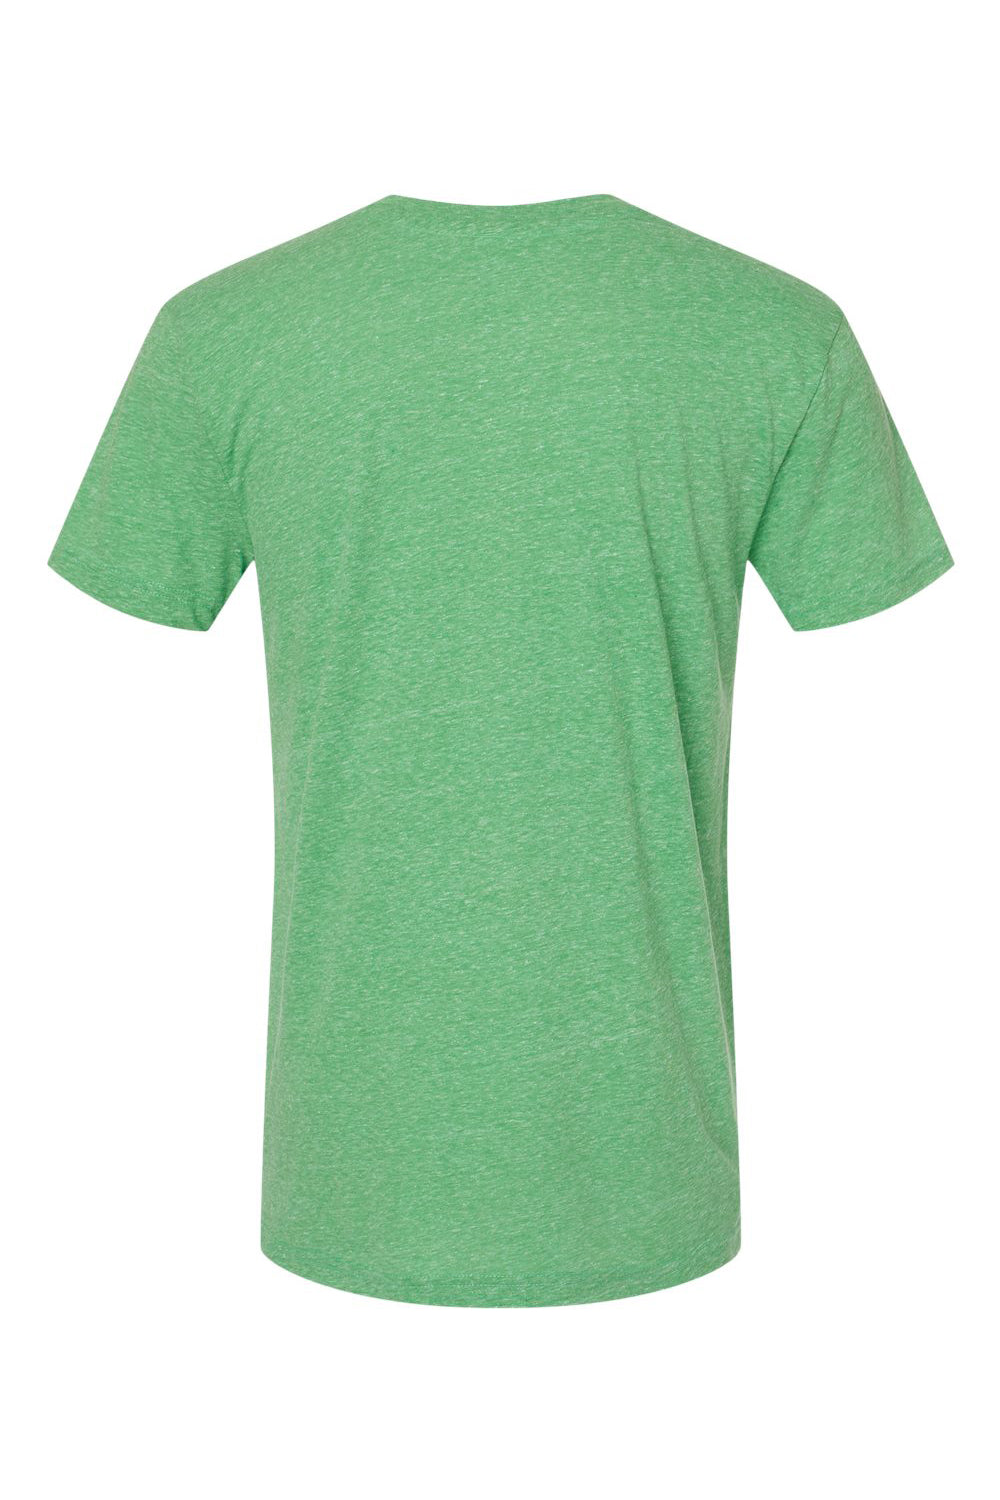 LAT 6991 Mens Harborside Melange Short Sleeve Crewneck T-Shirt Green Flat Back